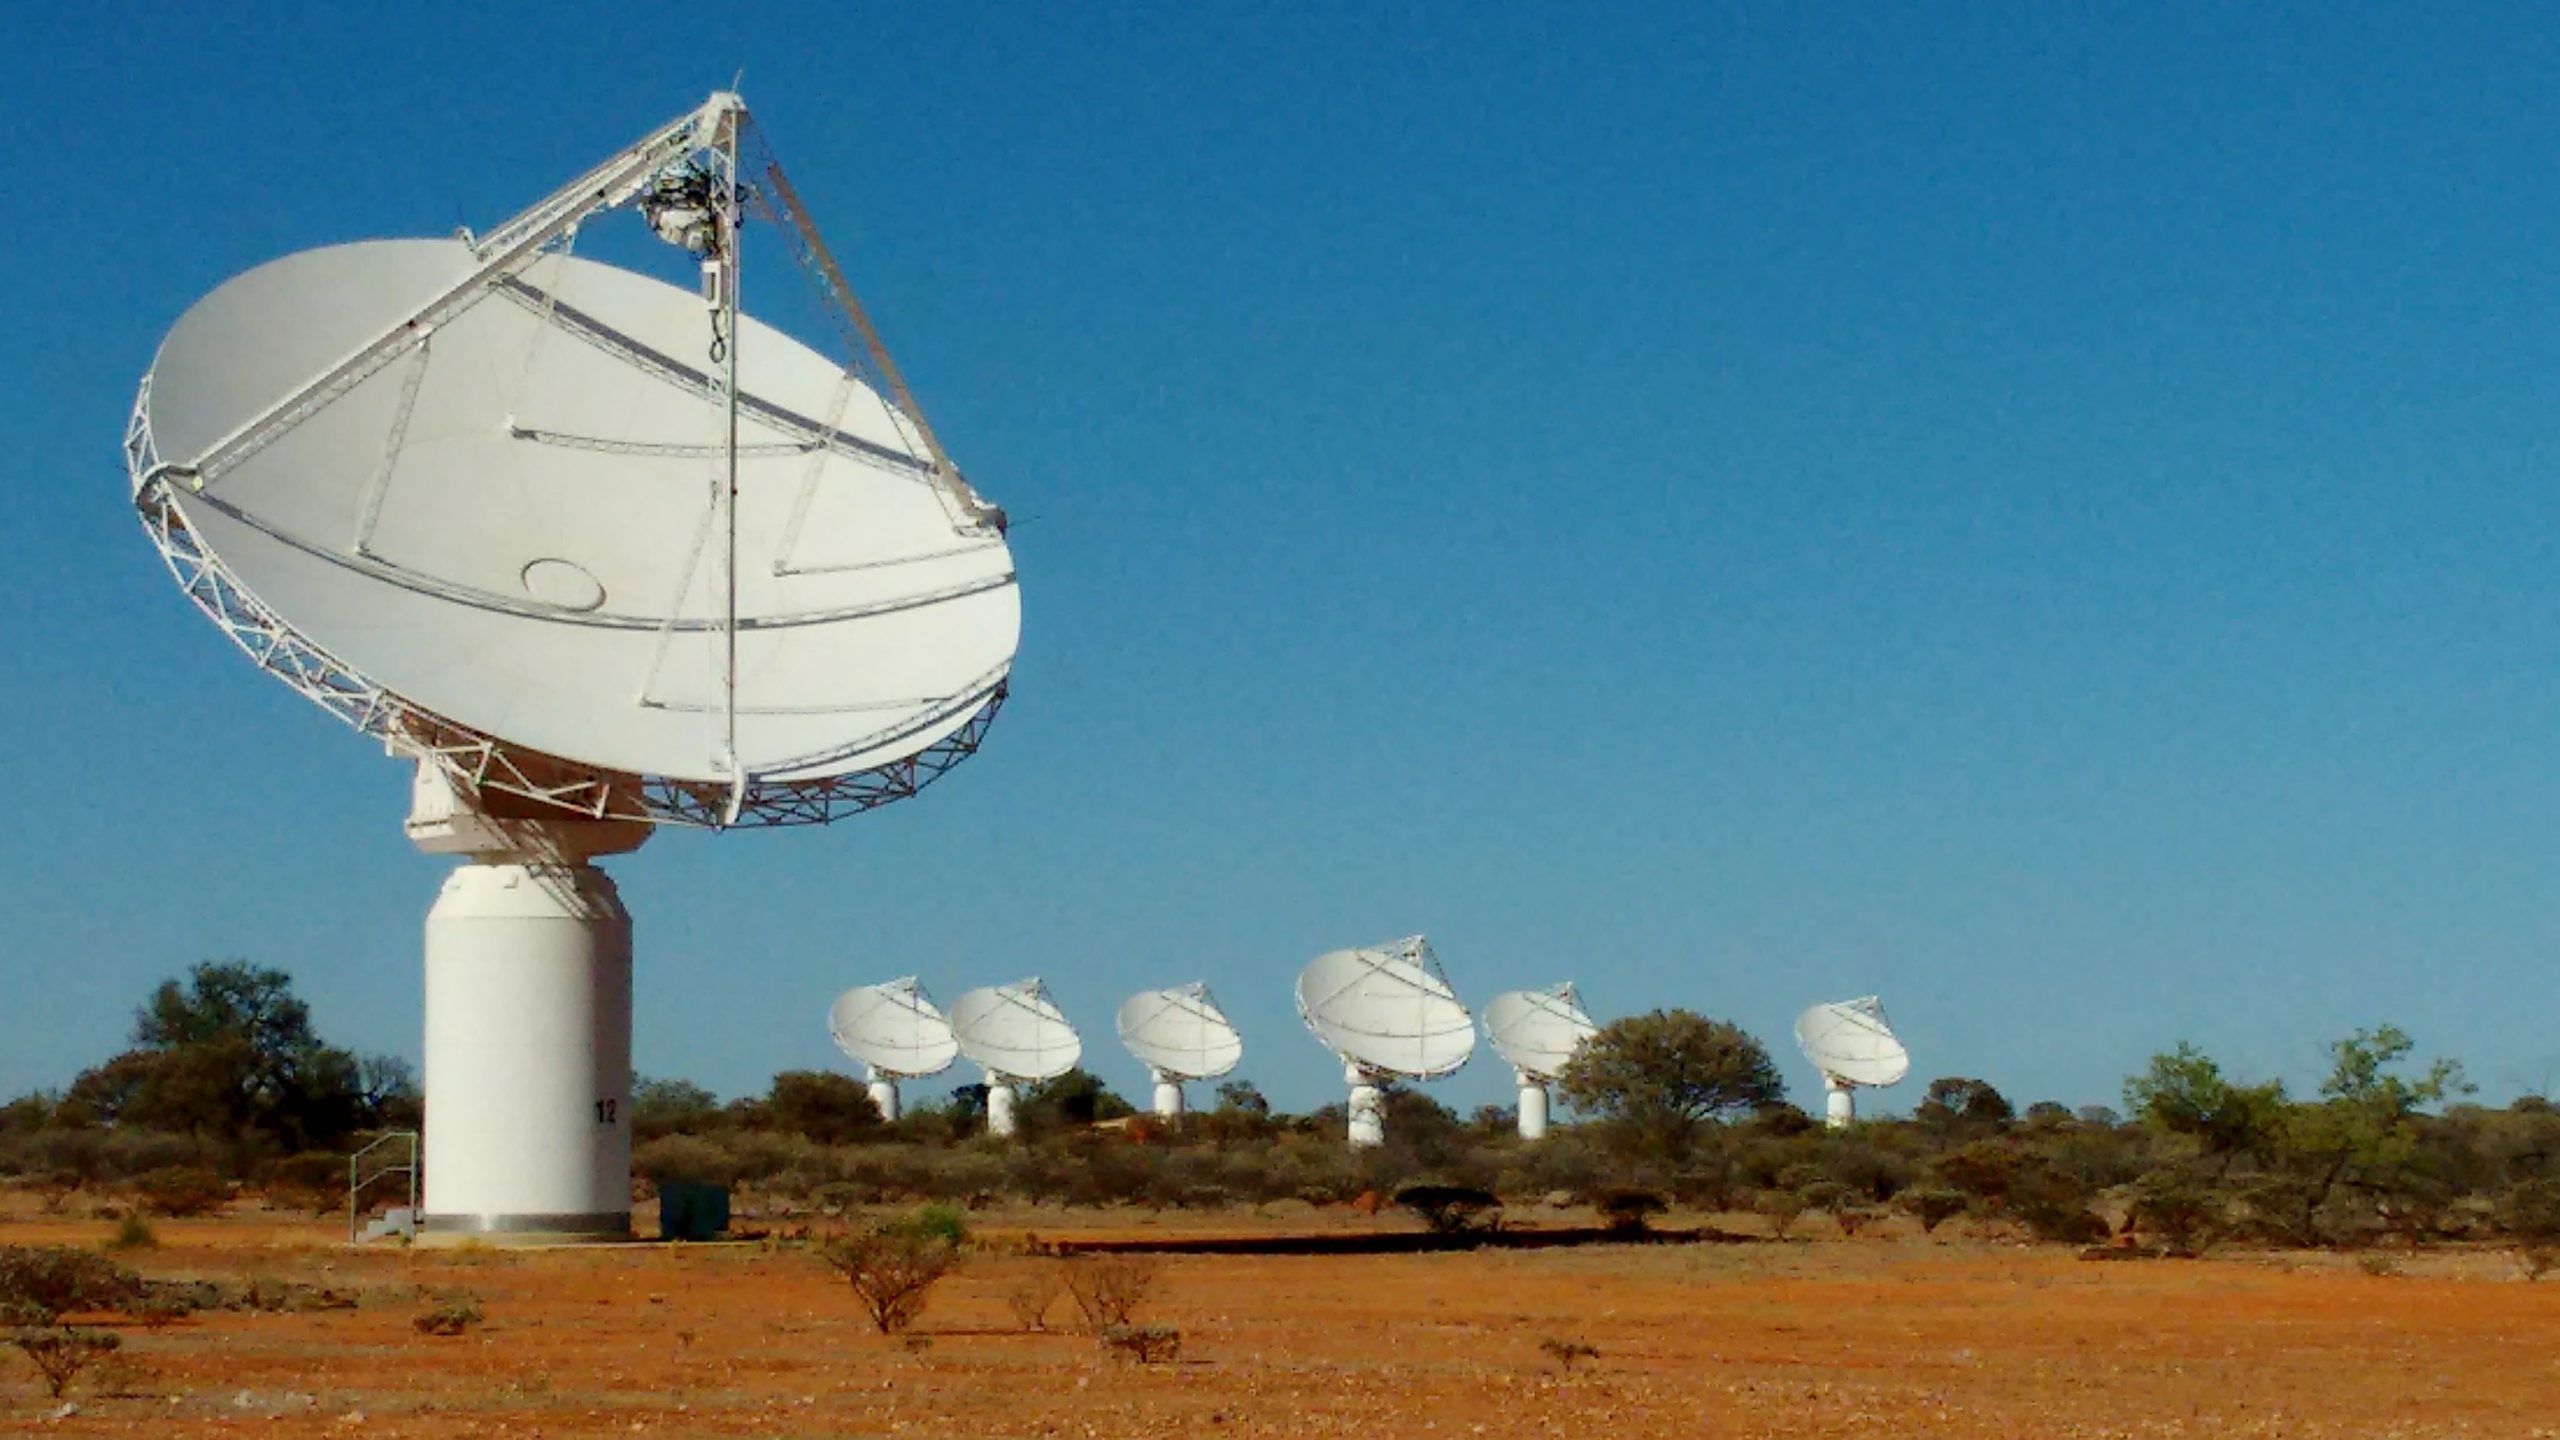 CSIRO's Australian Square Kilometre Array Pathfinder (ASKAP) is a radio telescope situated about 800 km north of Perth.